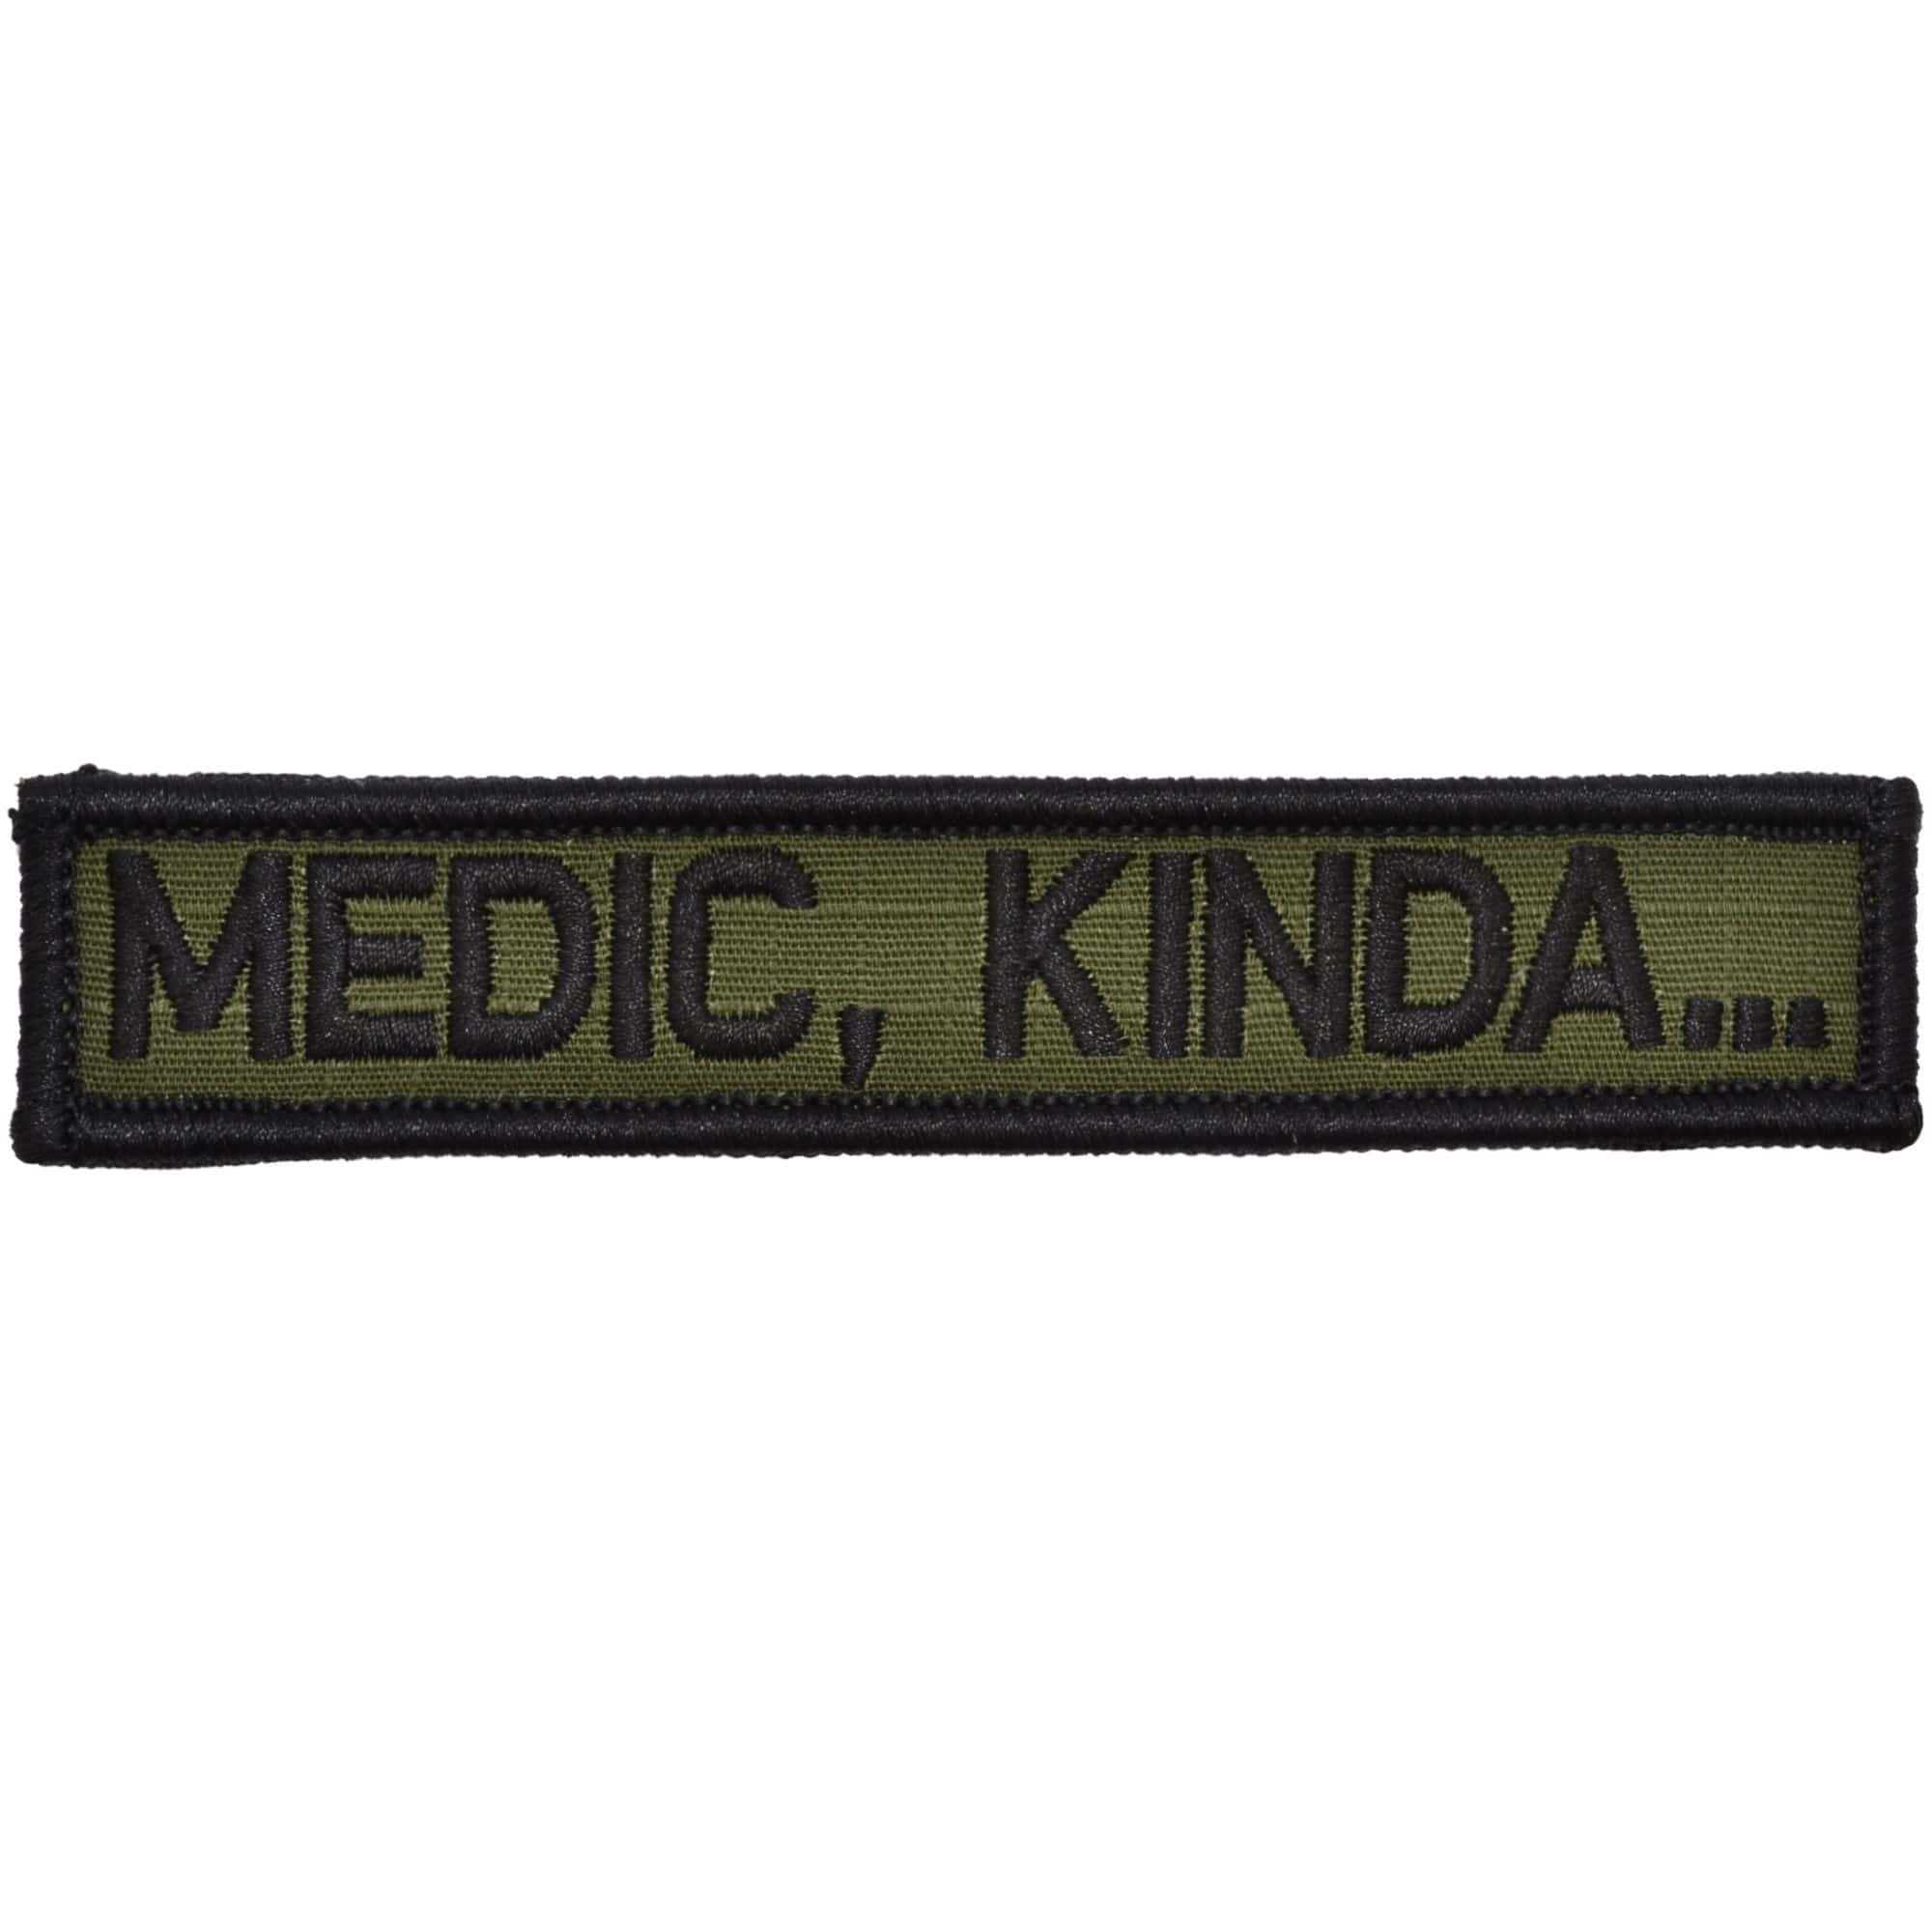 Medic, Kinda - 1x5 Patch Black | Tactical Gear Junkie